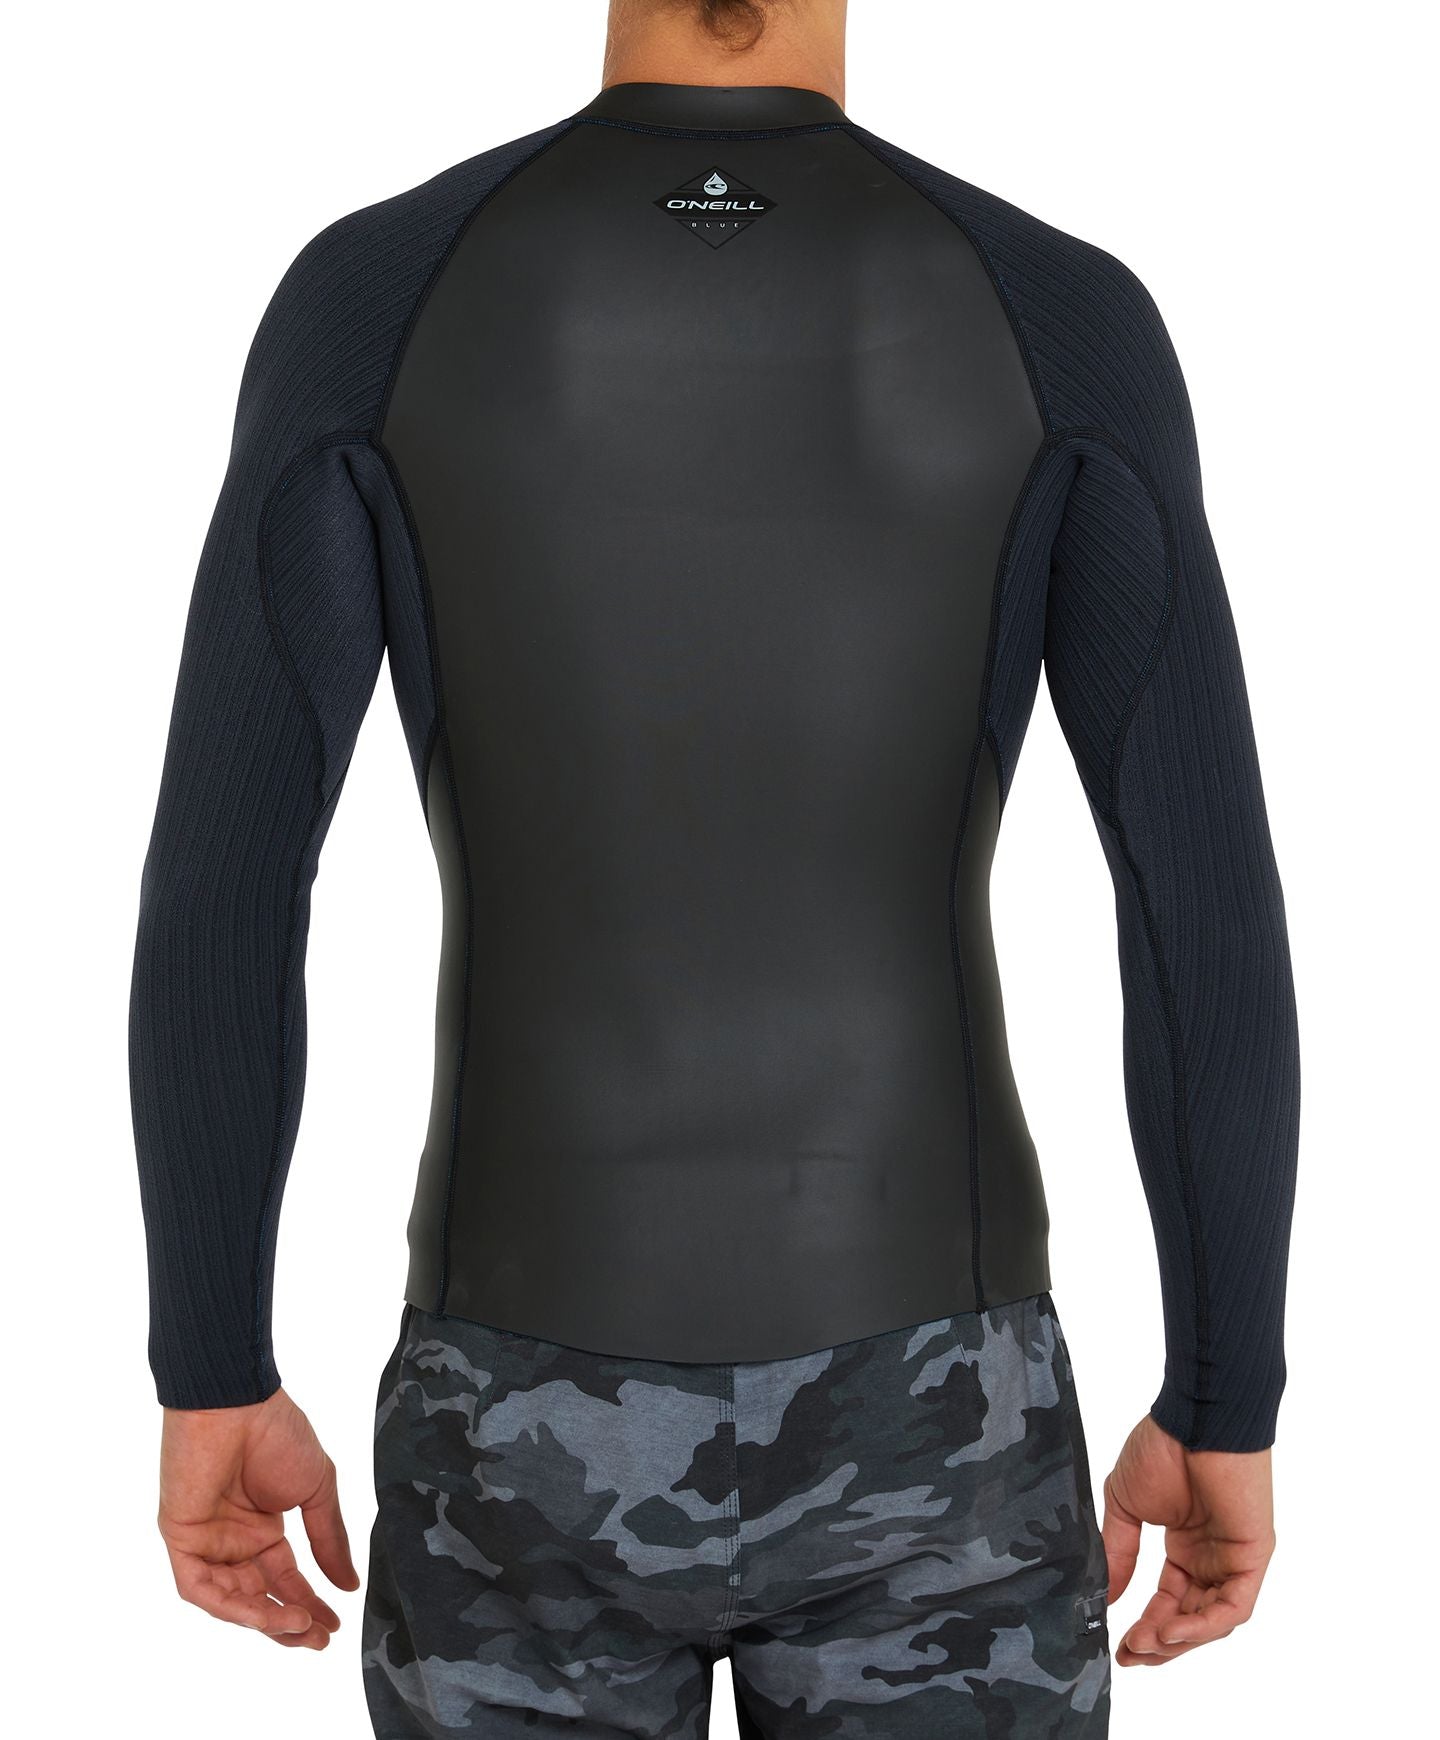 HyperFreak Front Zip Long Sleeve Wetsuit Jacket 2mm - Black